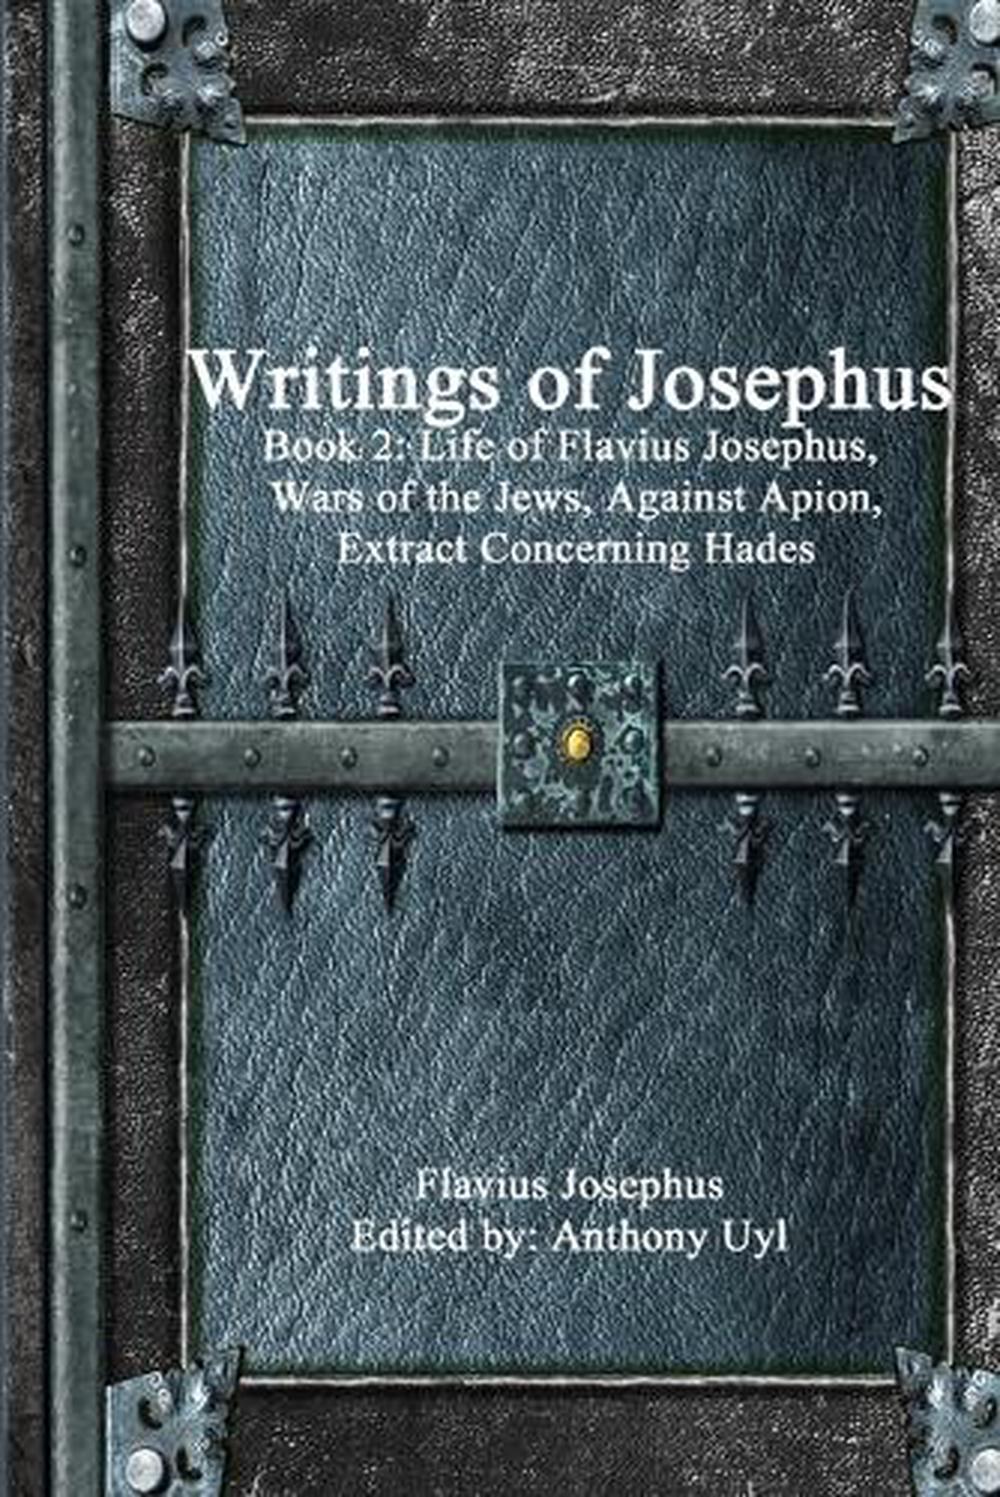 the complete book of josephus